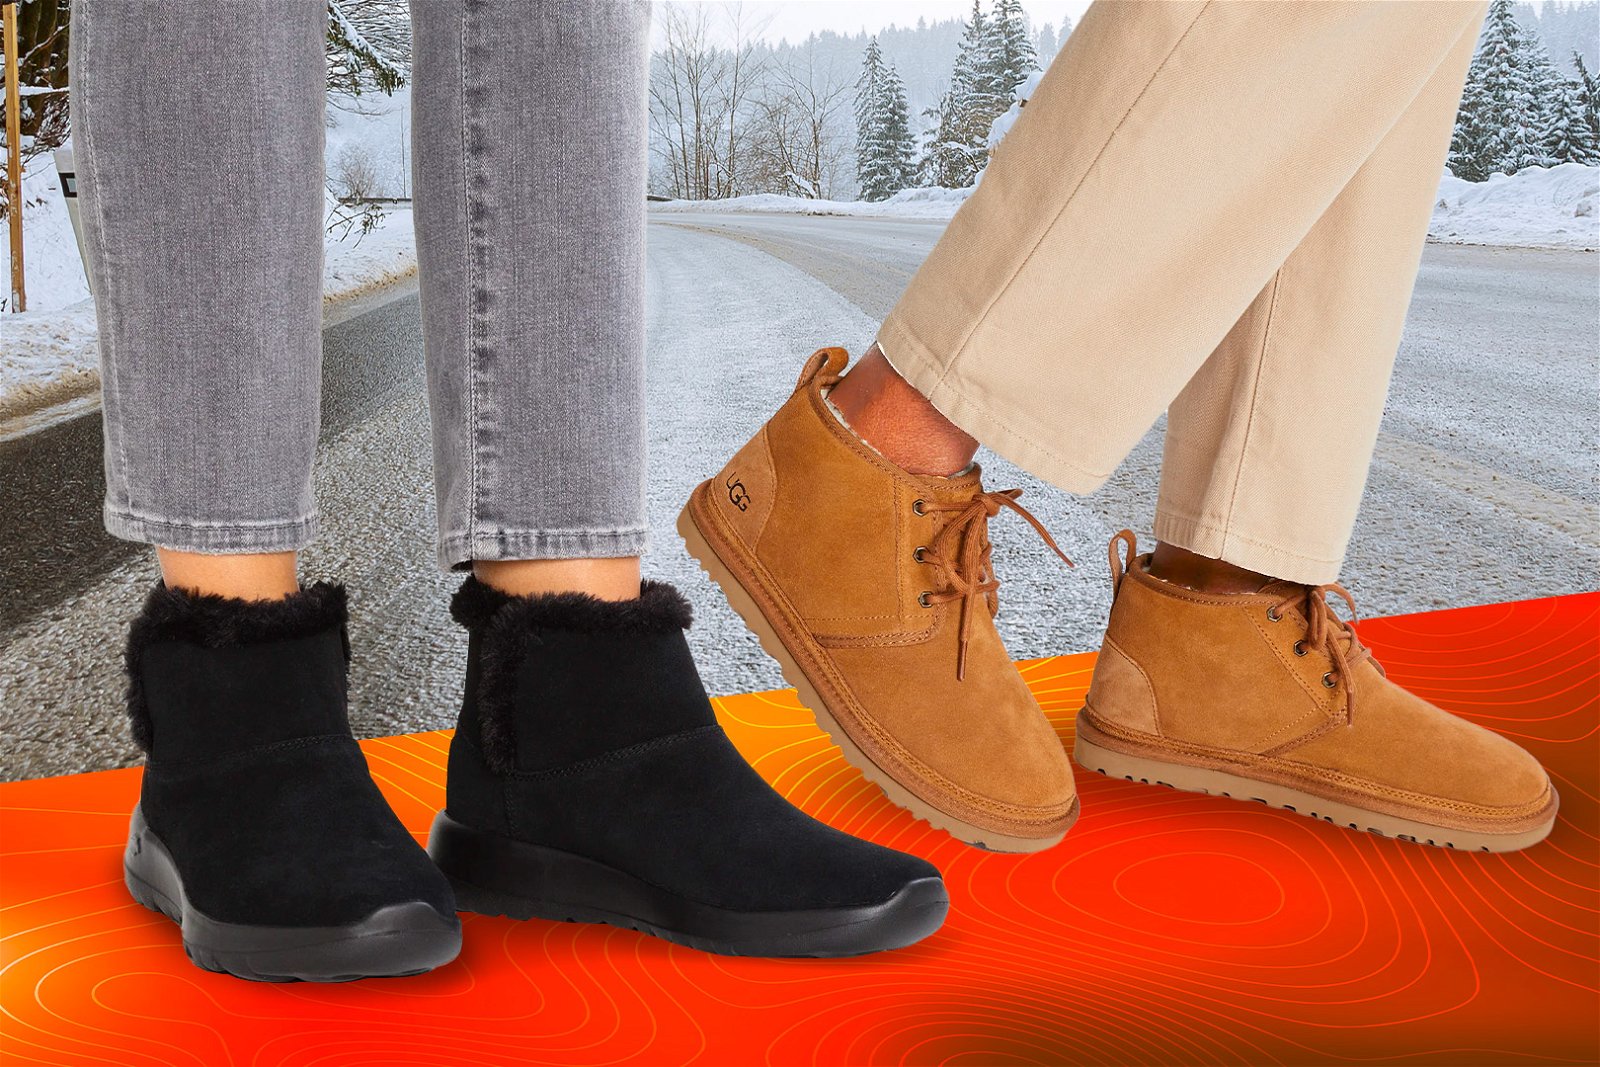 Scarpe invernali per avere i piedi caldi